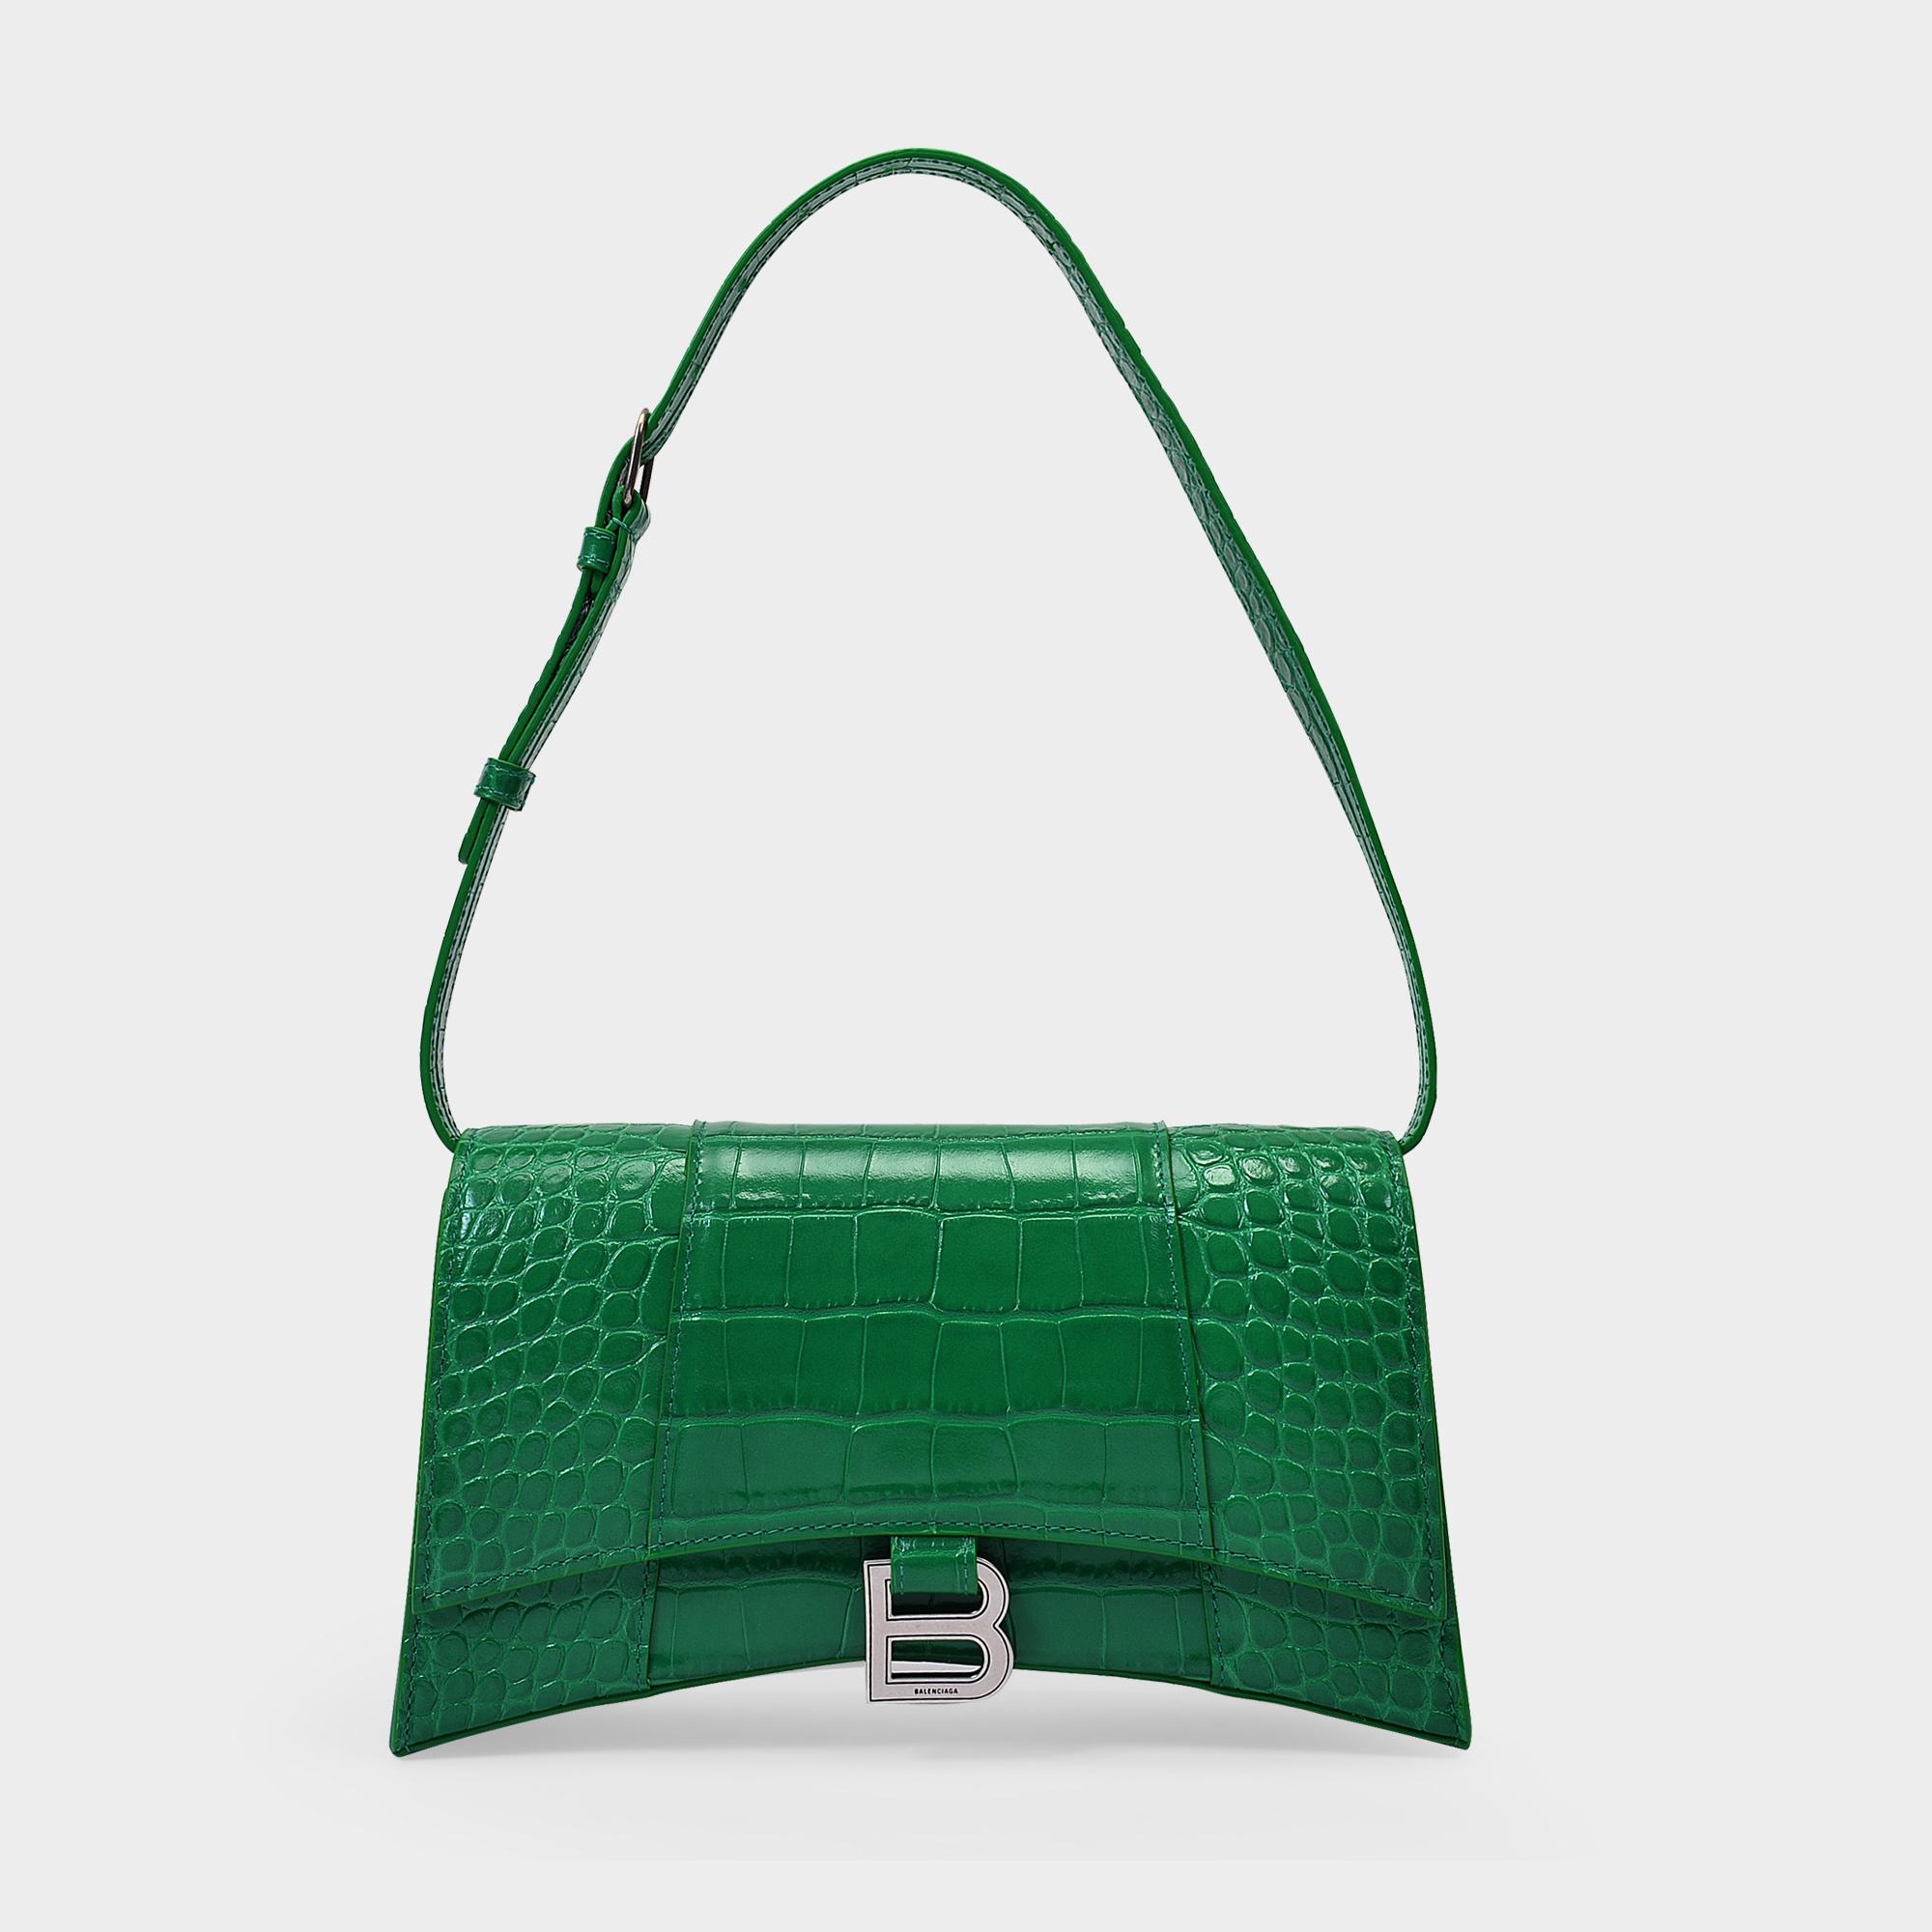 Balenciaga Hourglass Baguette Bag In Leaf Green Croc Embossed - Lyst